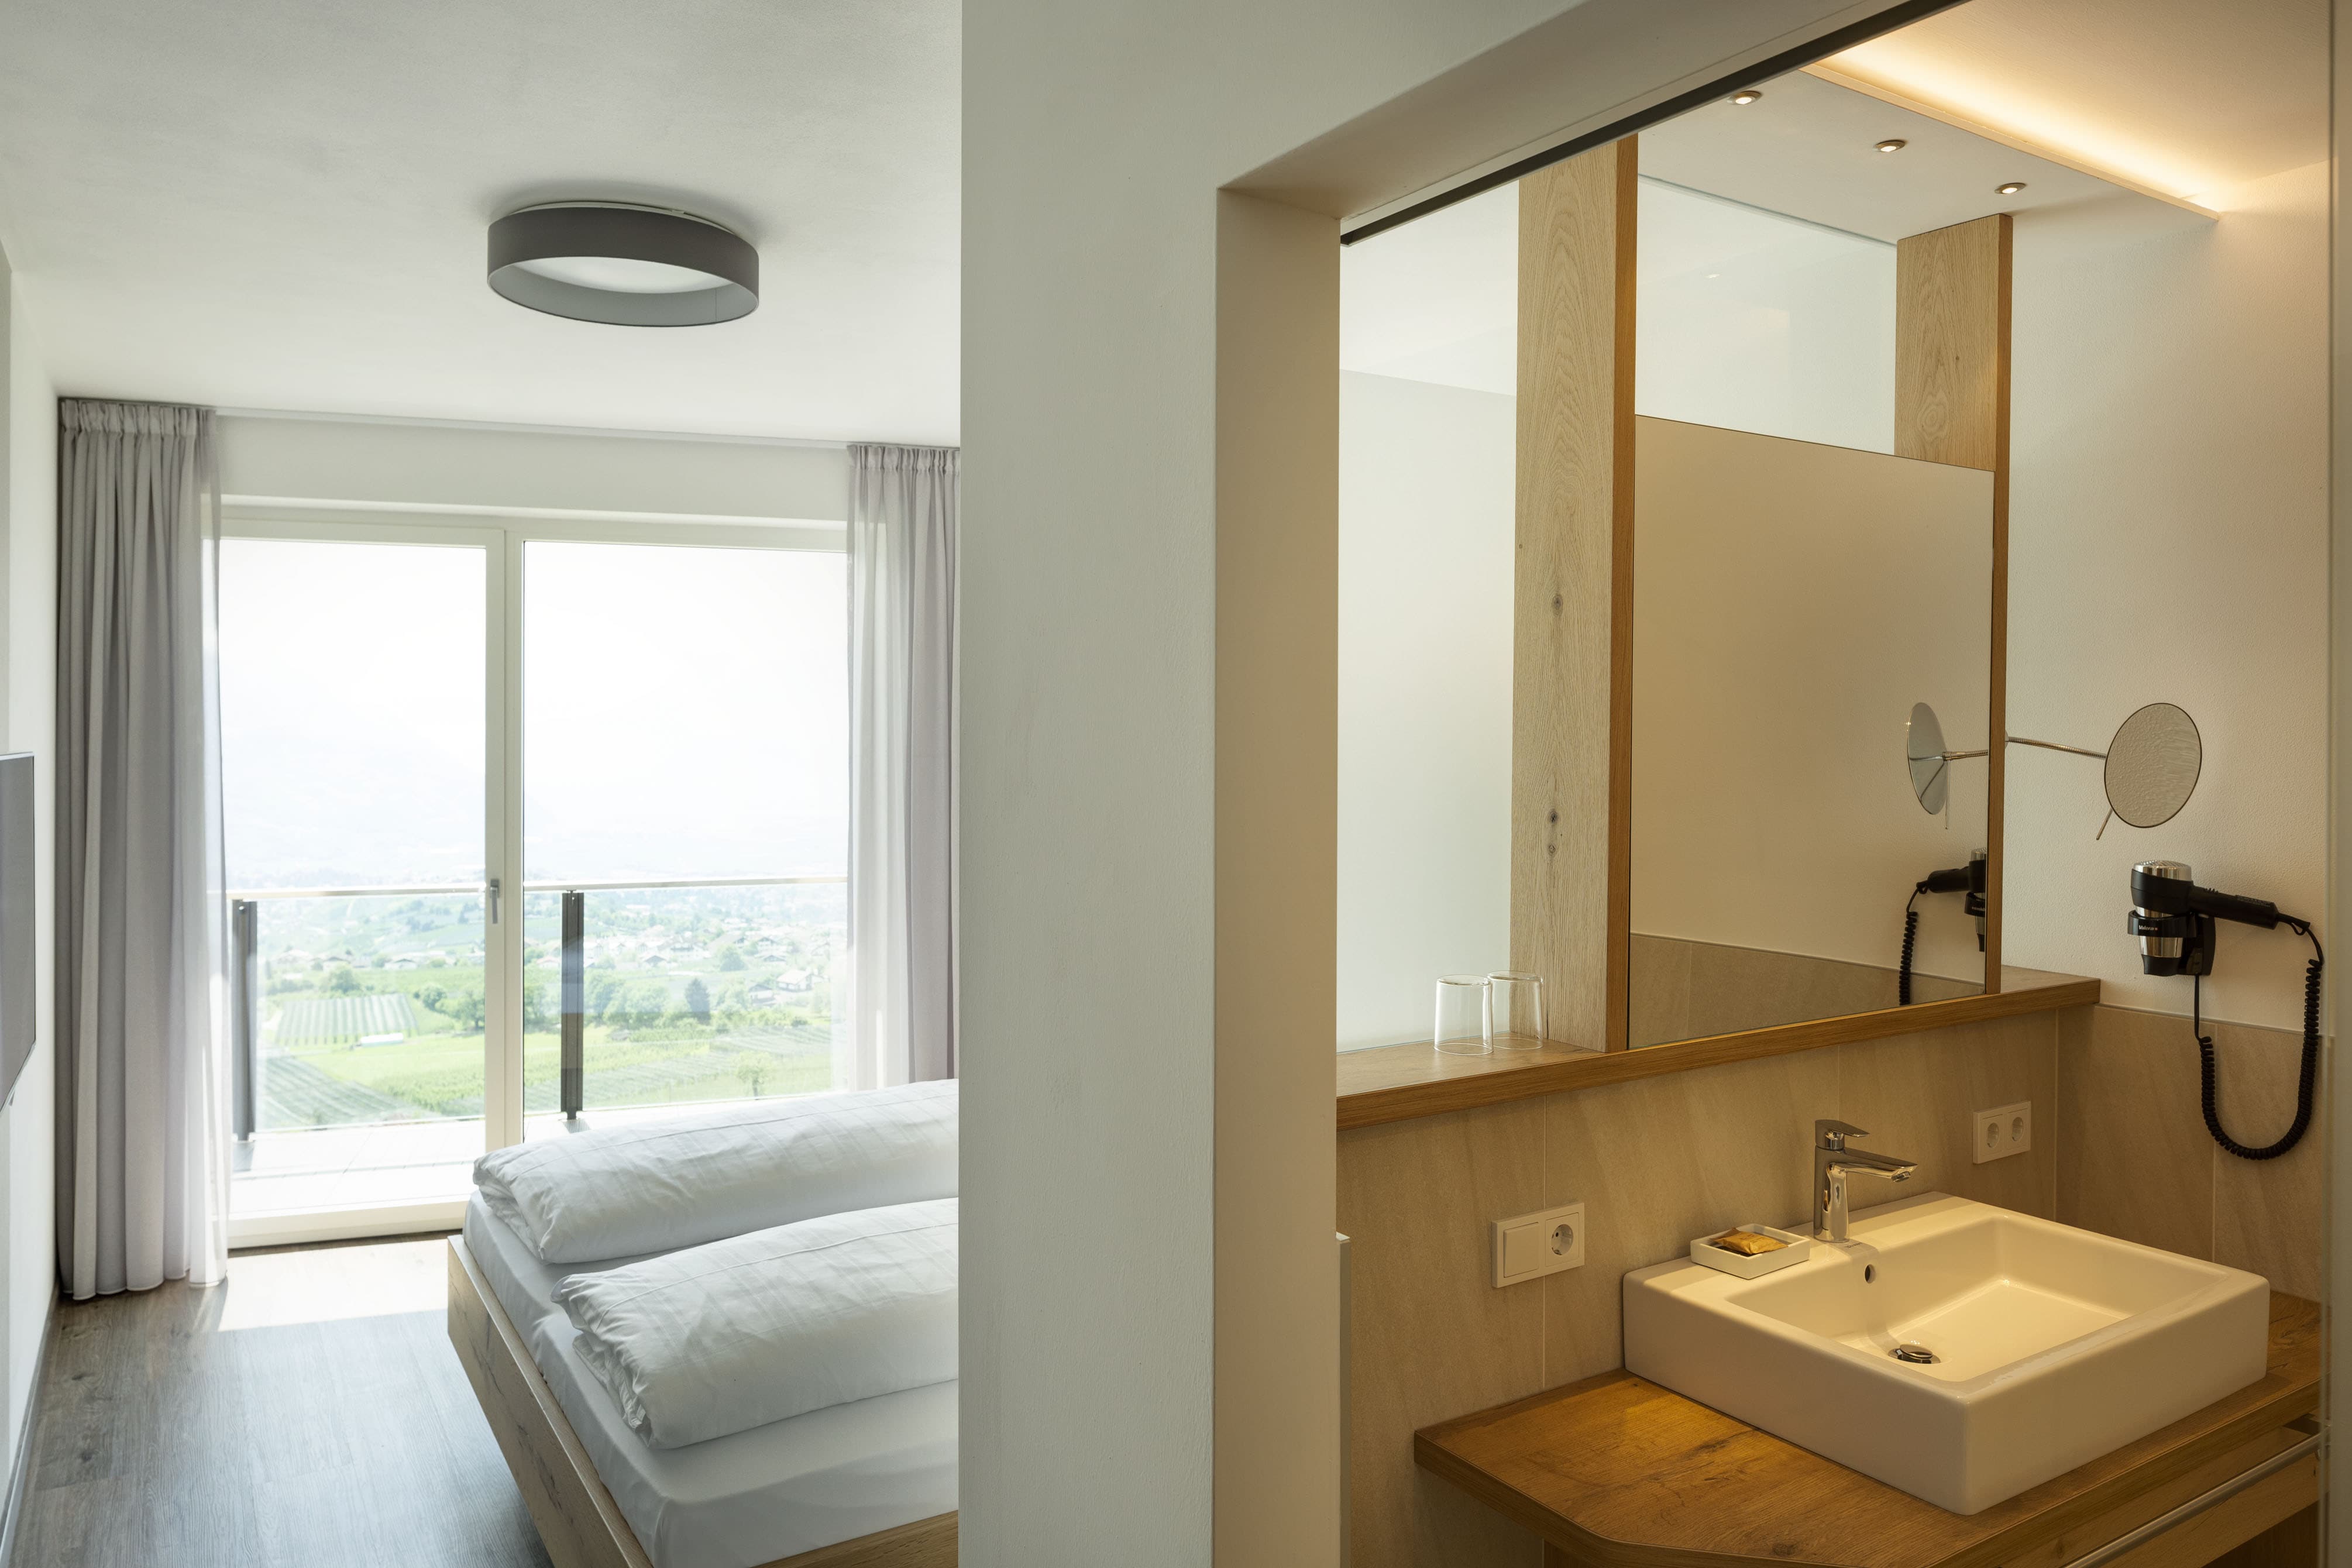 Hotel Lechner Suite Bathroom Sink Bed Bedroom Balcony